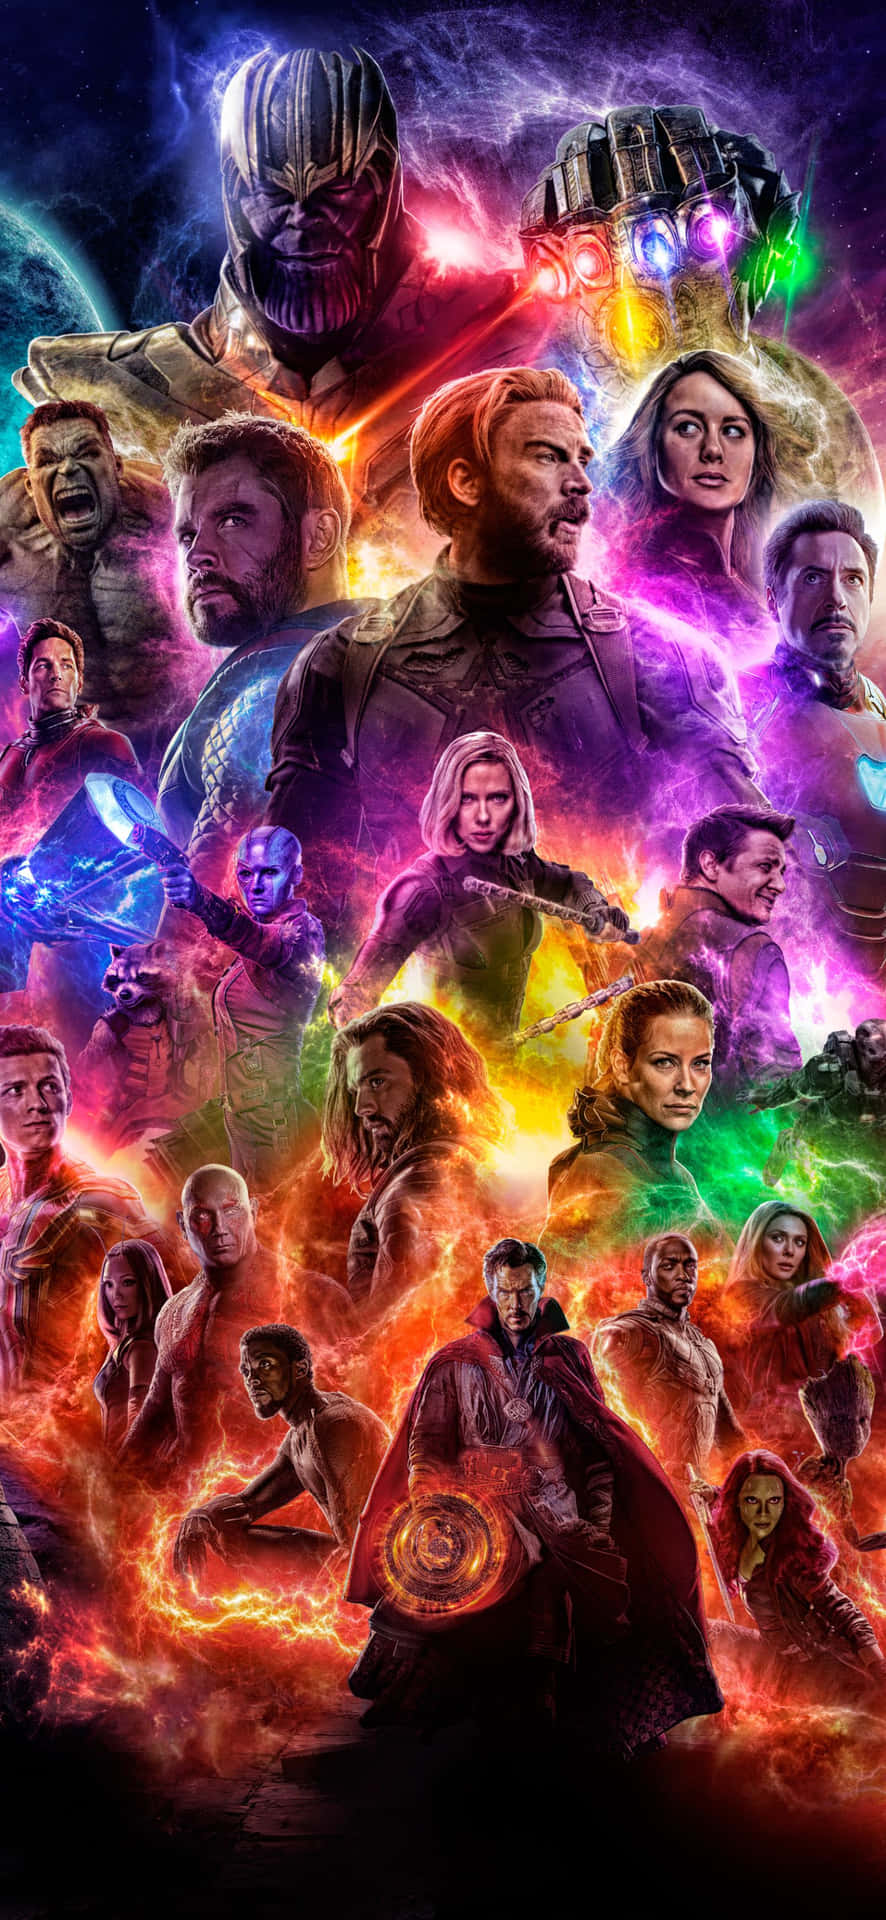 Pixel 3xl Marvel's Avengers Background 1440 x 3120 Background